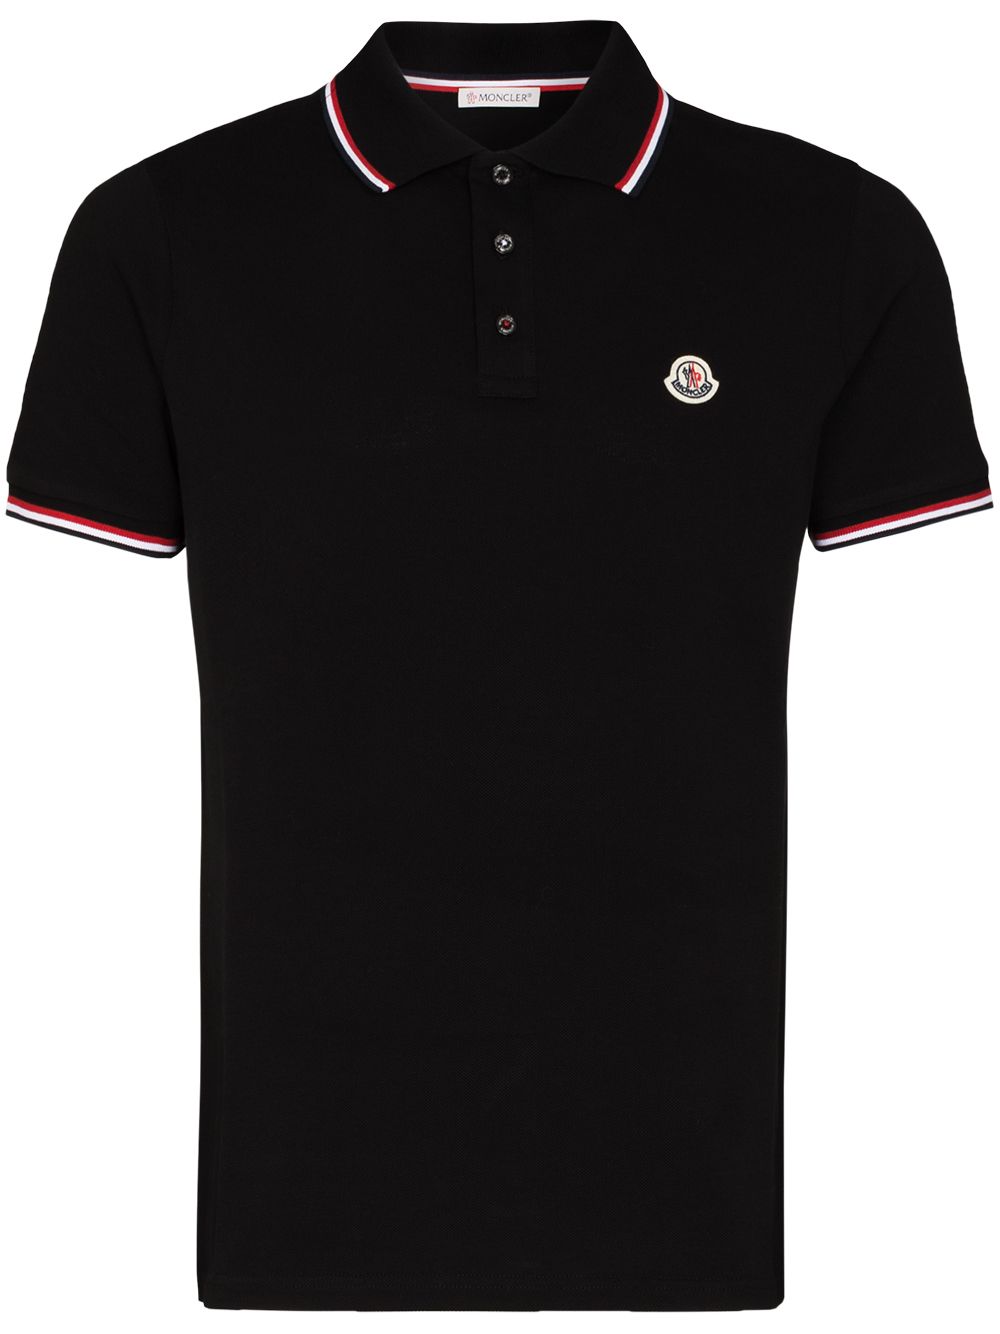 Moncler Poloshirt mit Logo - Schwarz von Moncler